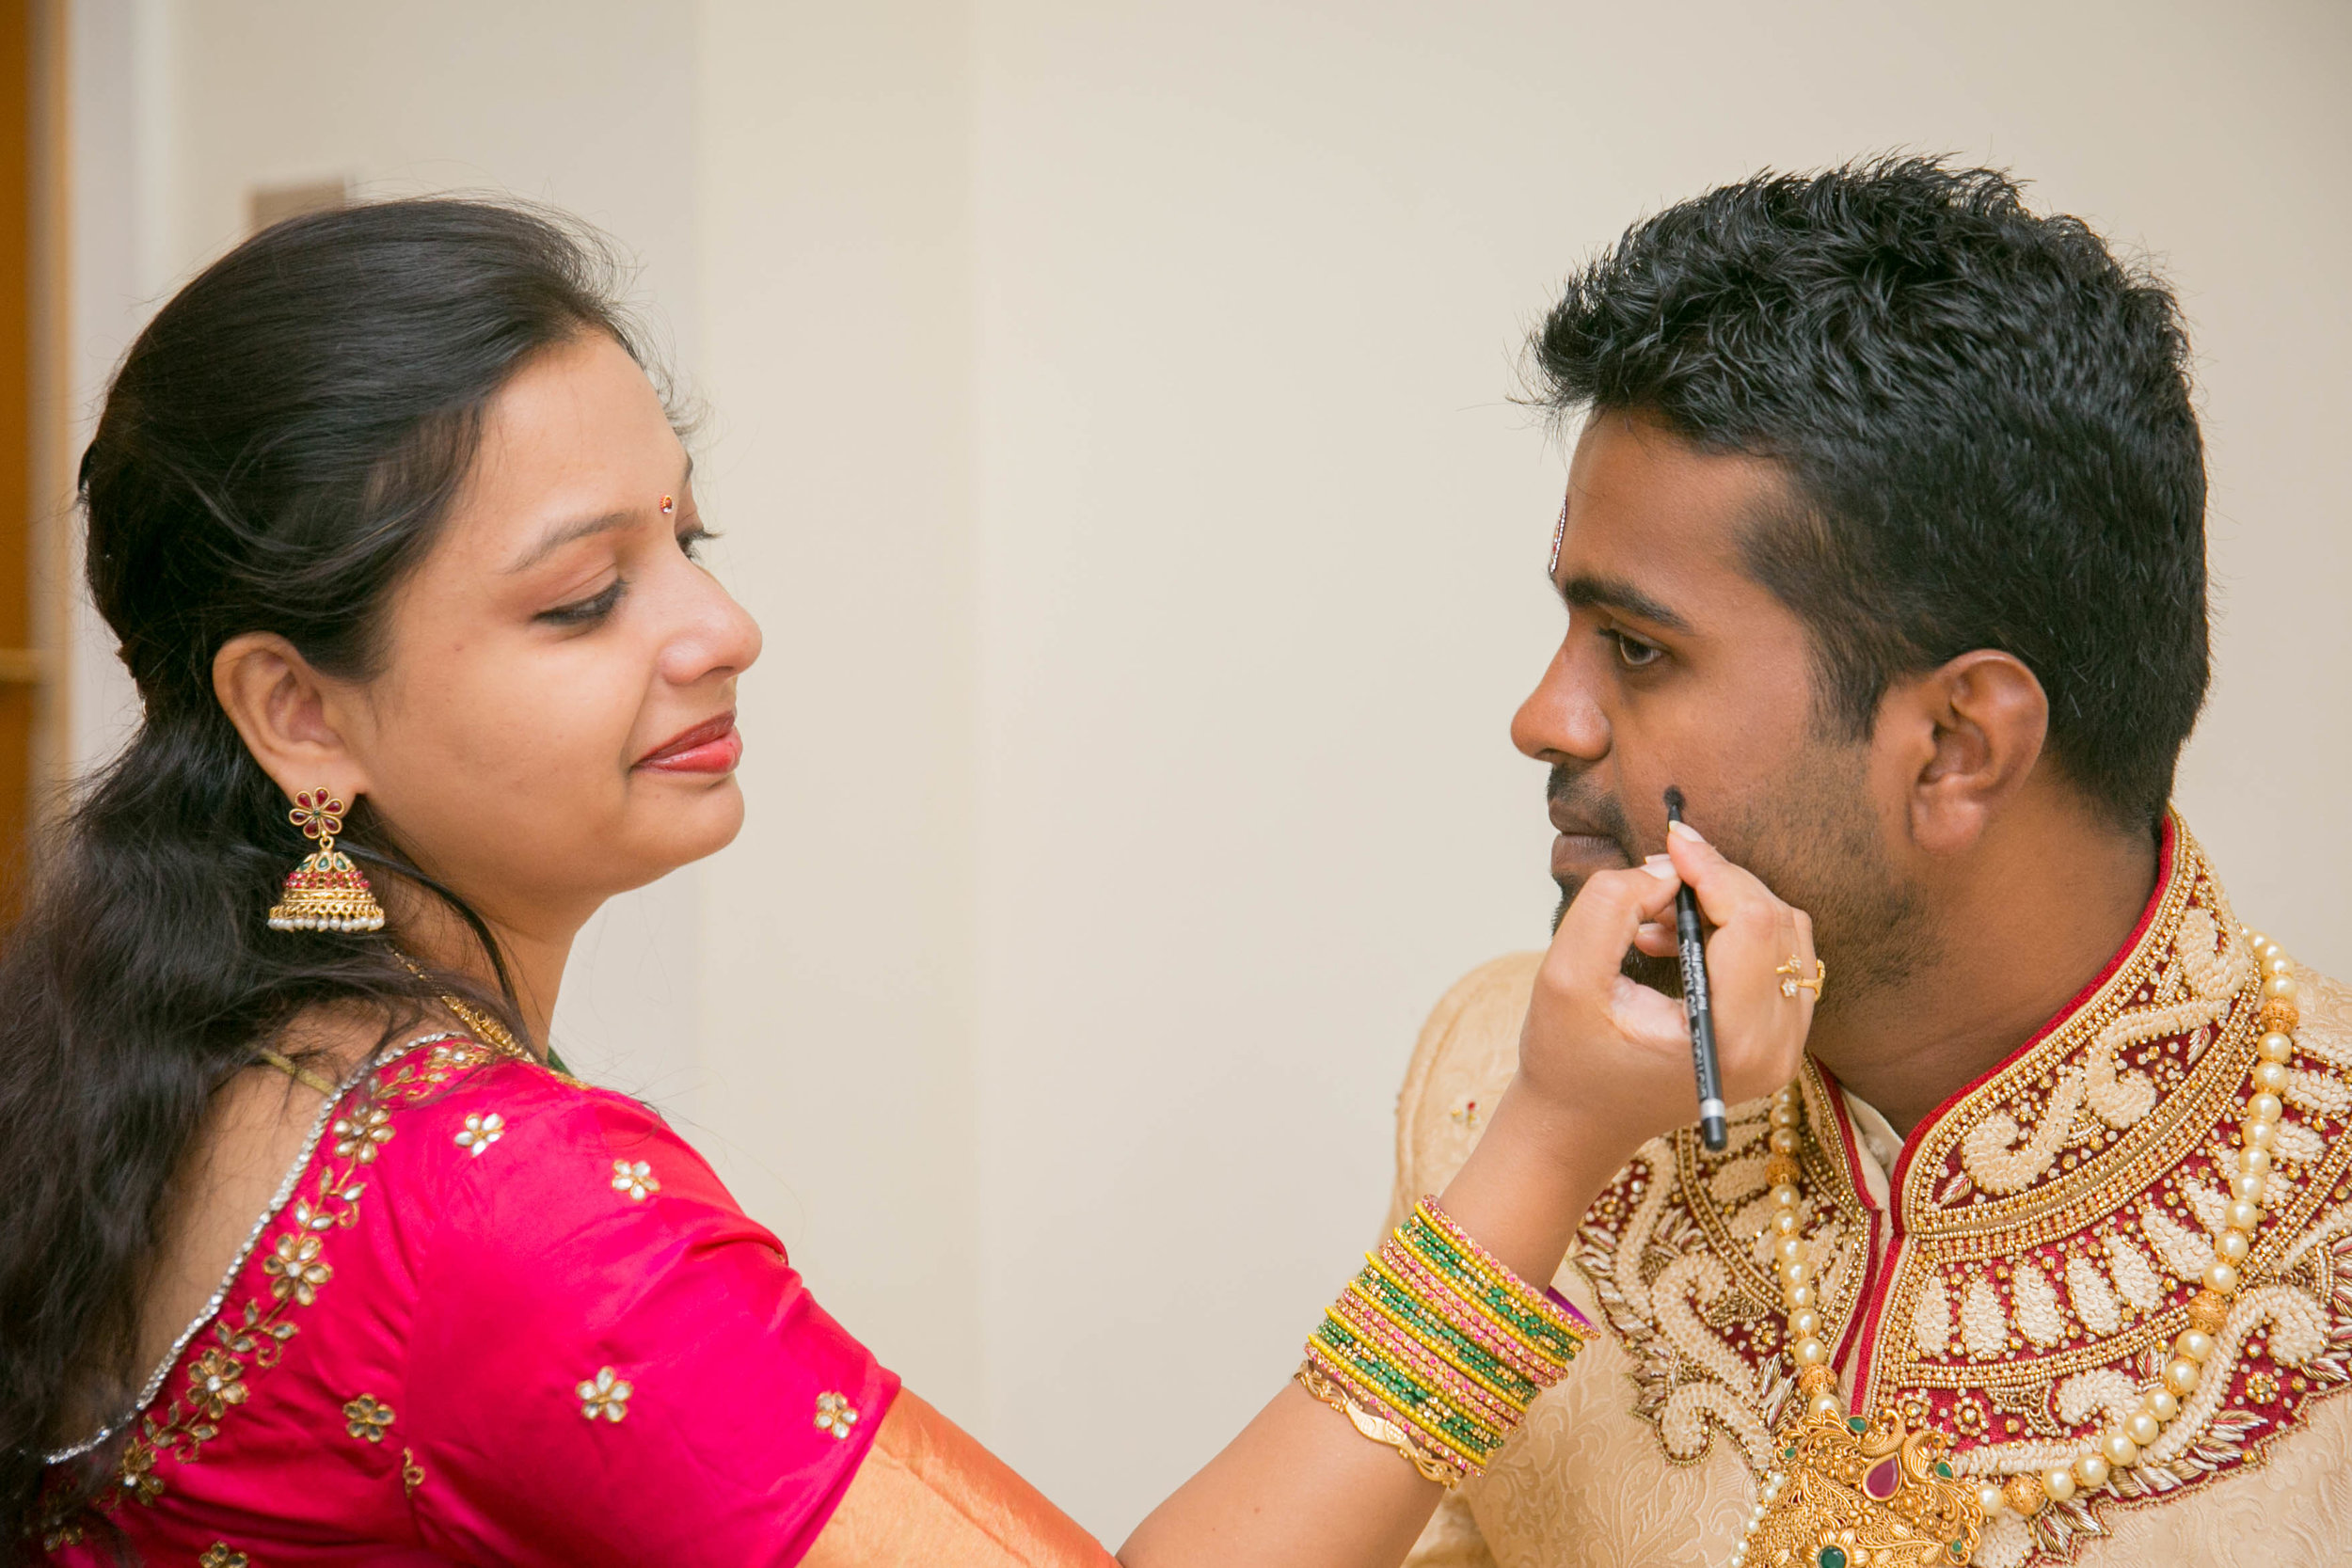 premier-banquetting-london-Hindu-asian-wedding-photographer-natalia-smith-photography-3.jpg